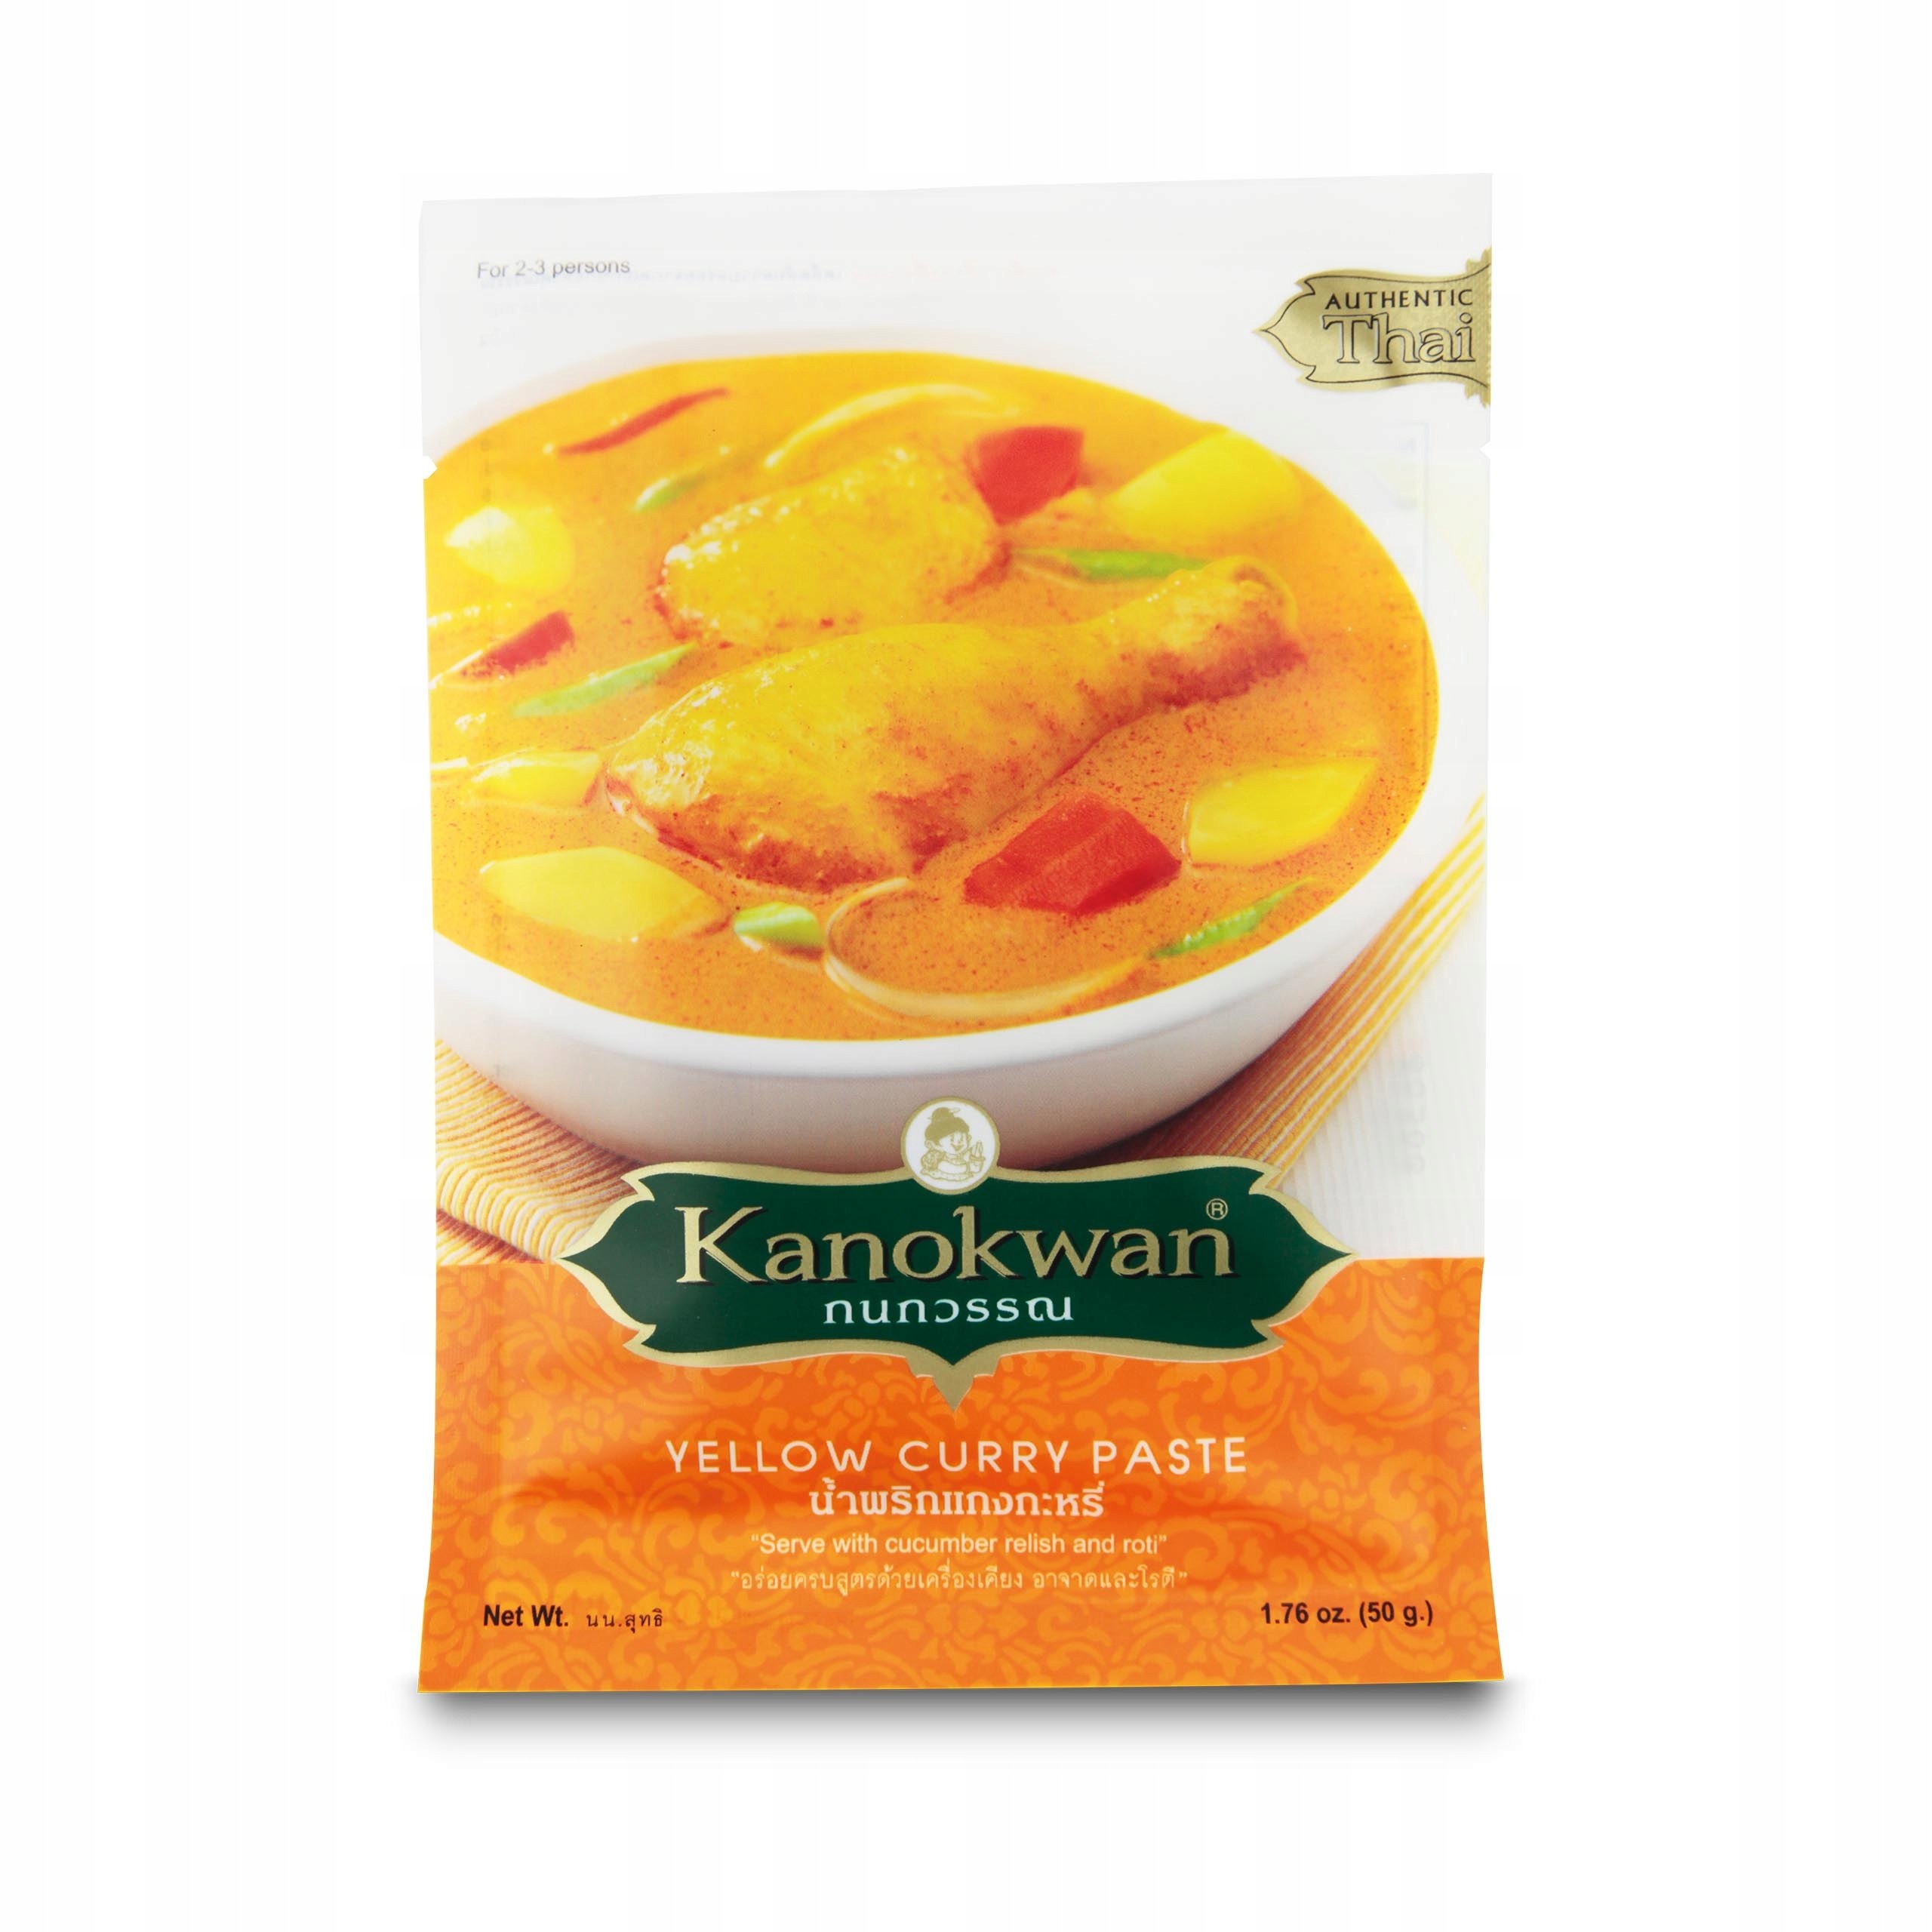 KANOKWAN Żółta pasta curry 50 g Kod producenta 8858744800071